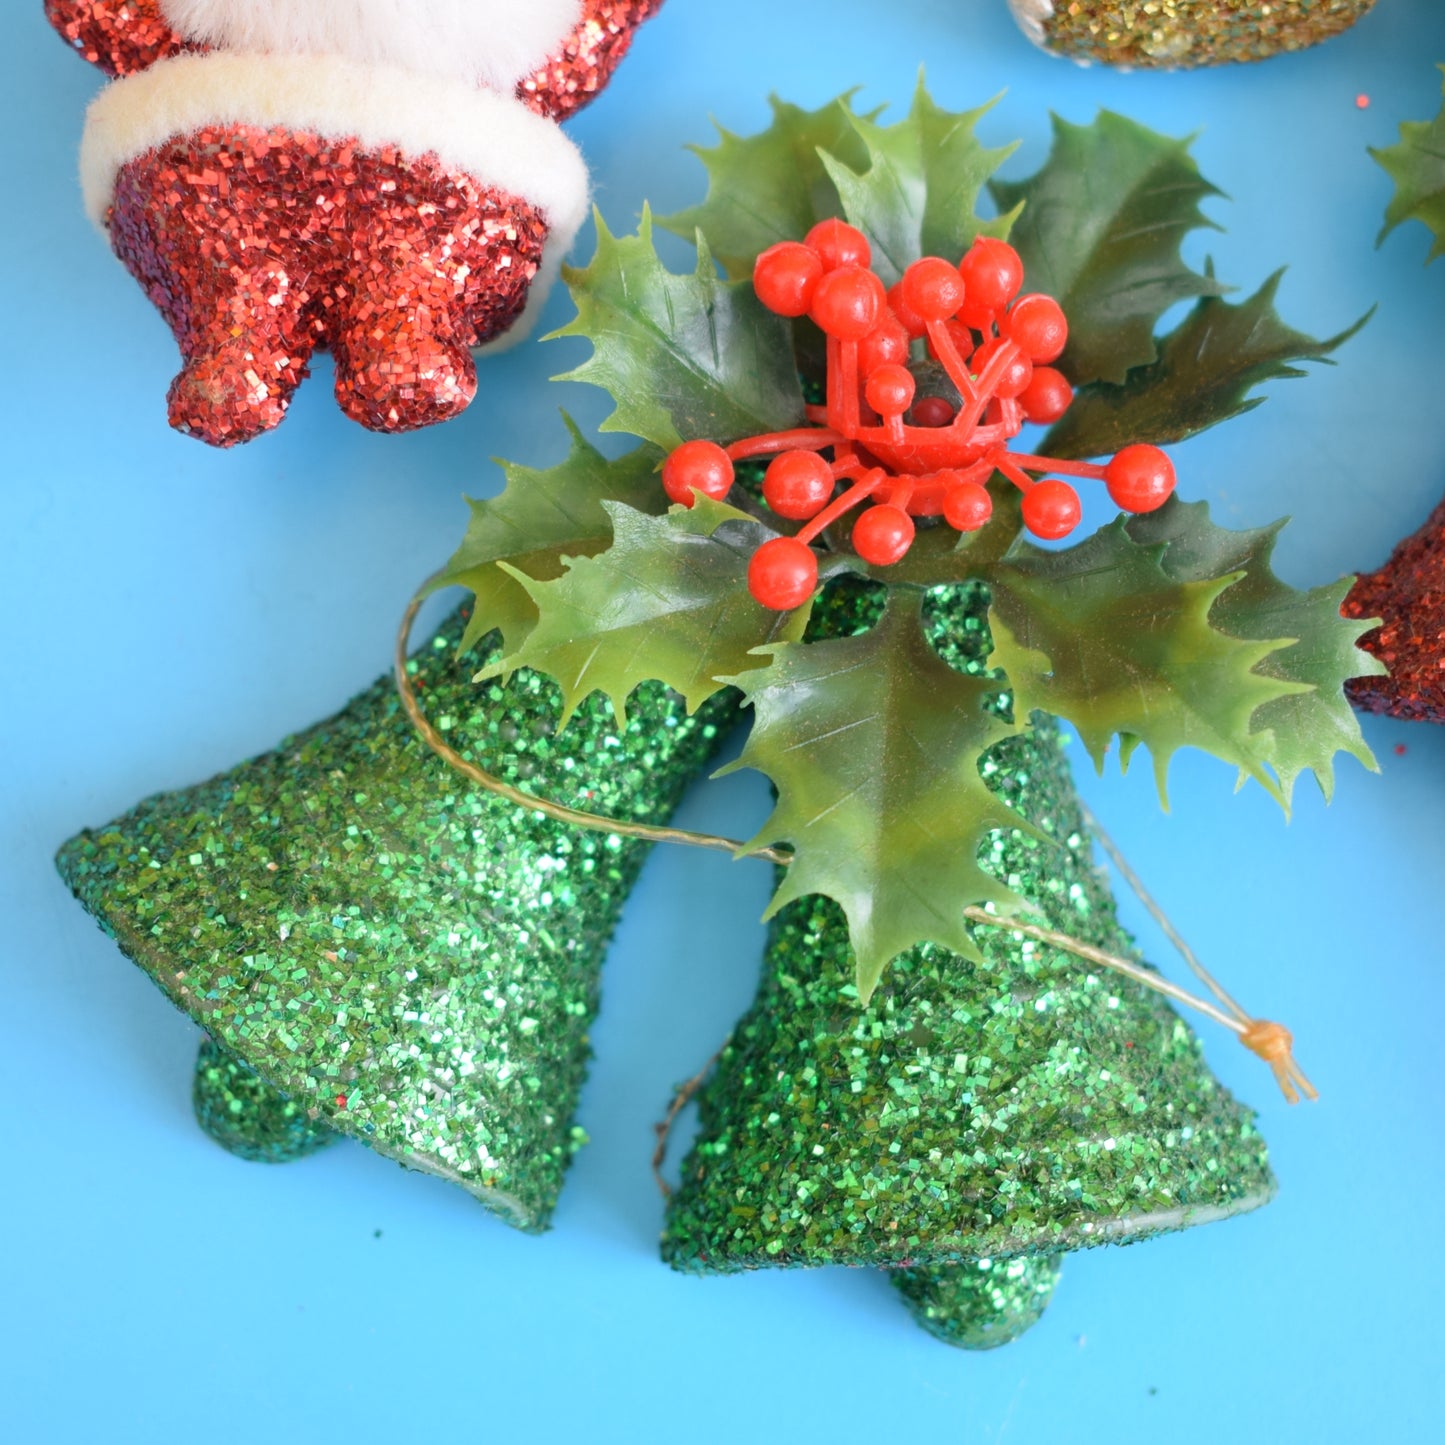 Vintage 1960s Kitsch Glitter Plastic Christmas Decorations x5 - Santa